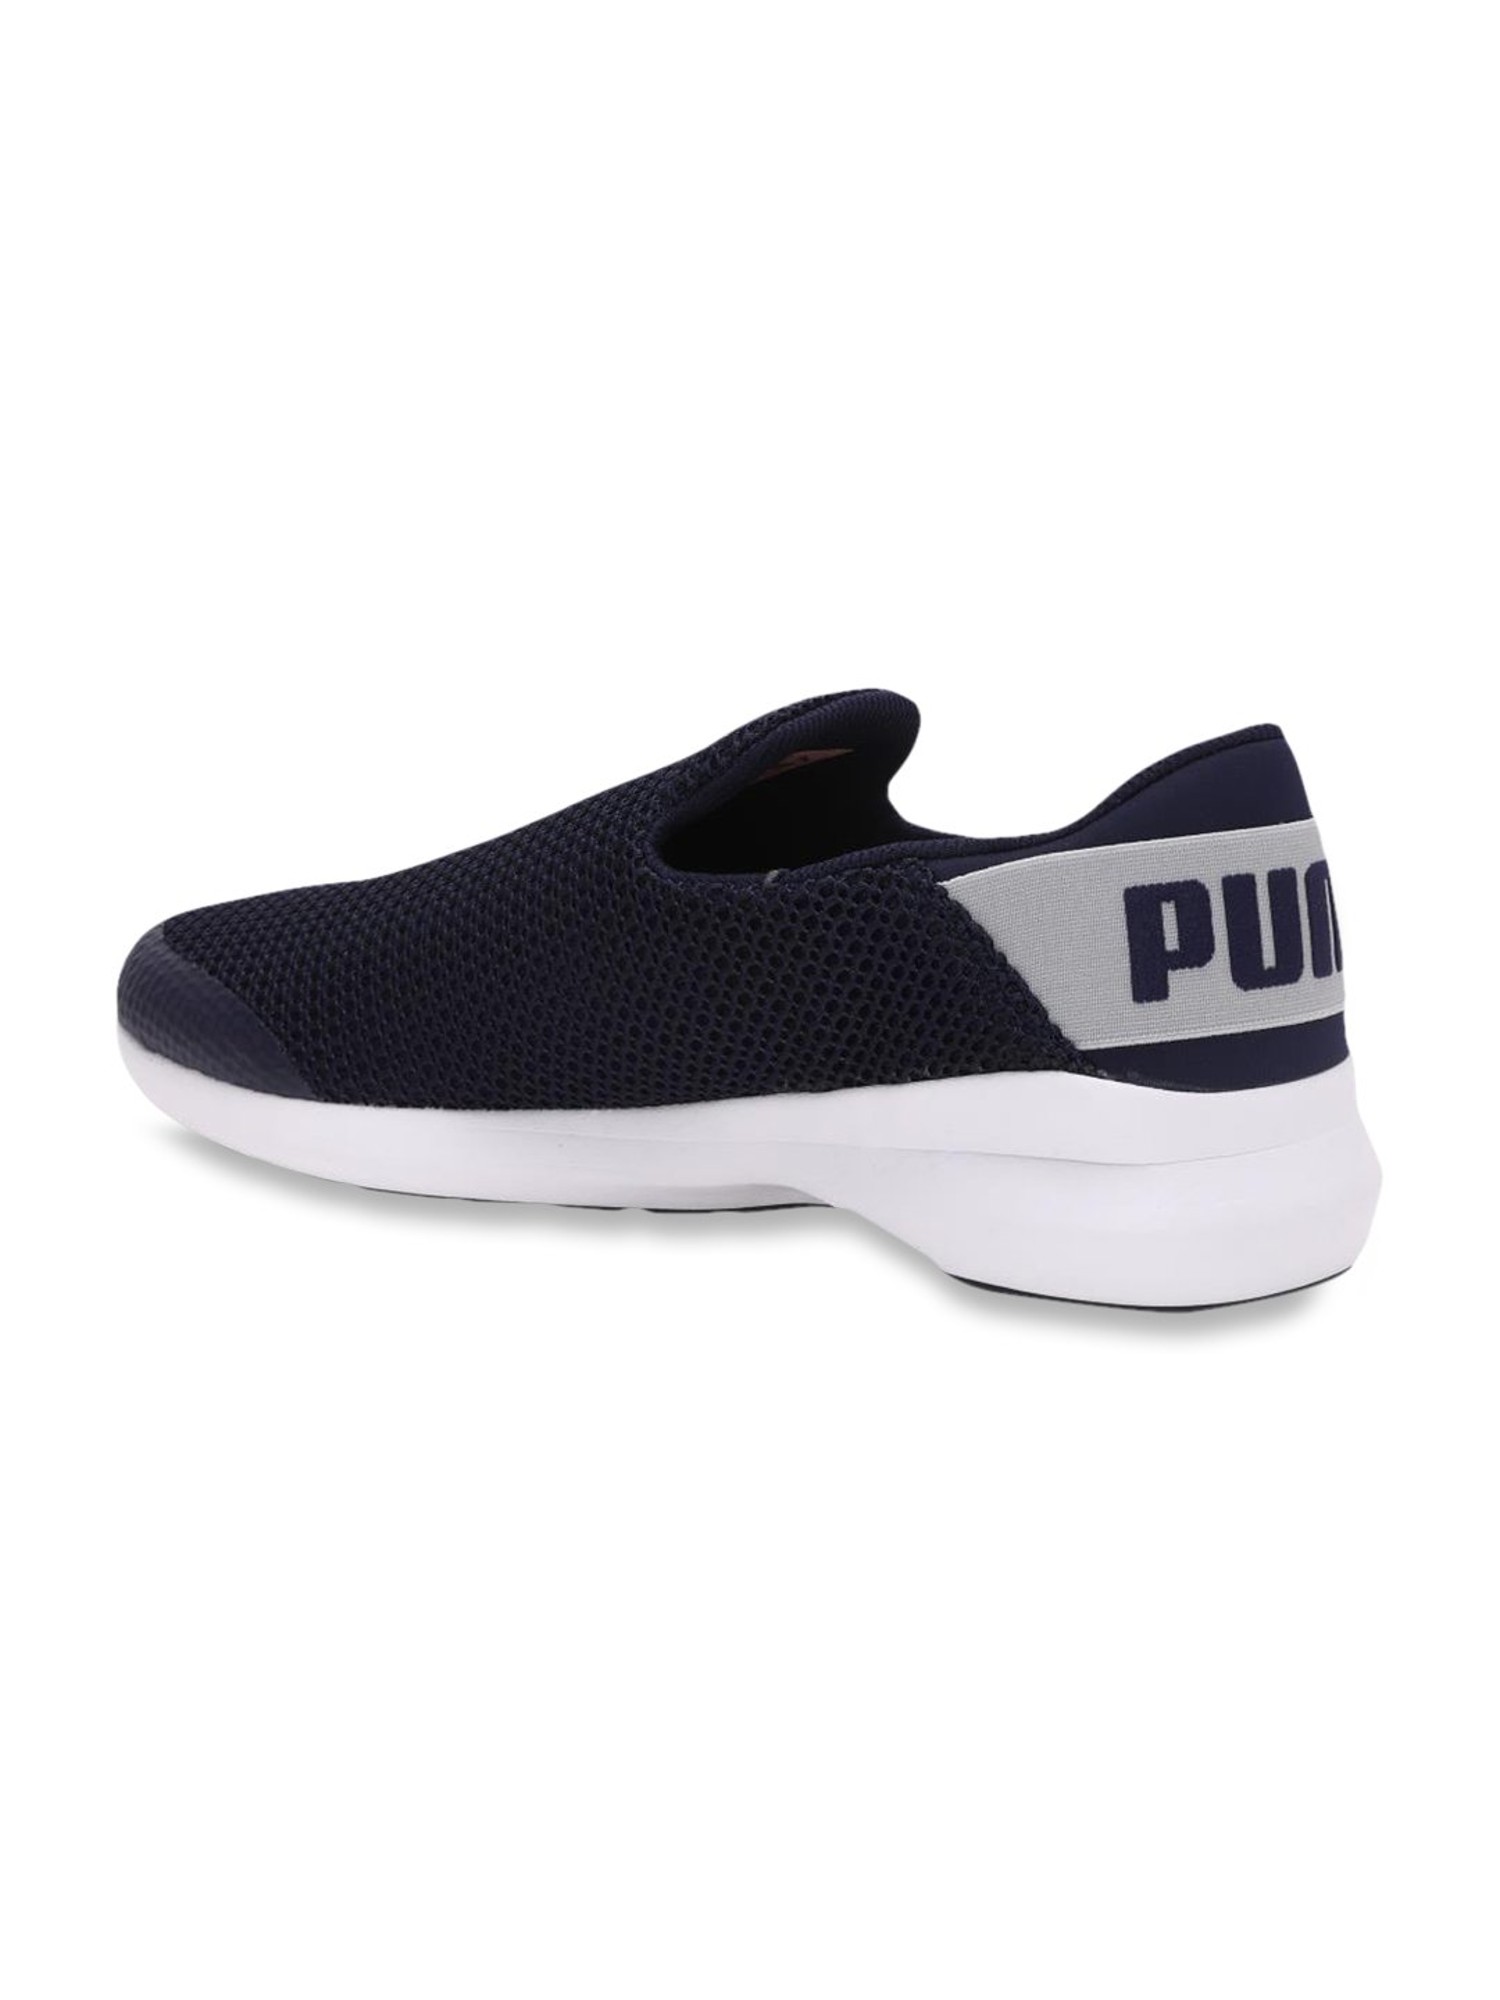 Puma Stride Evo IDP Peacoat Sneakers 